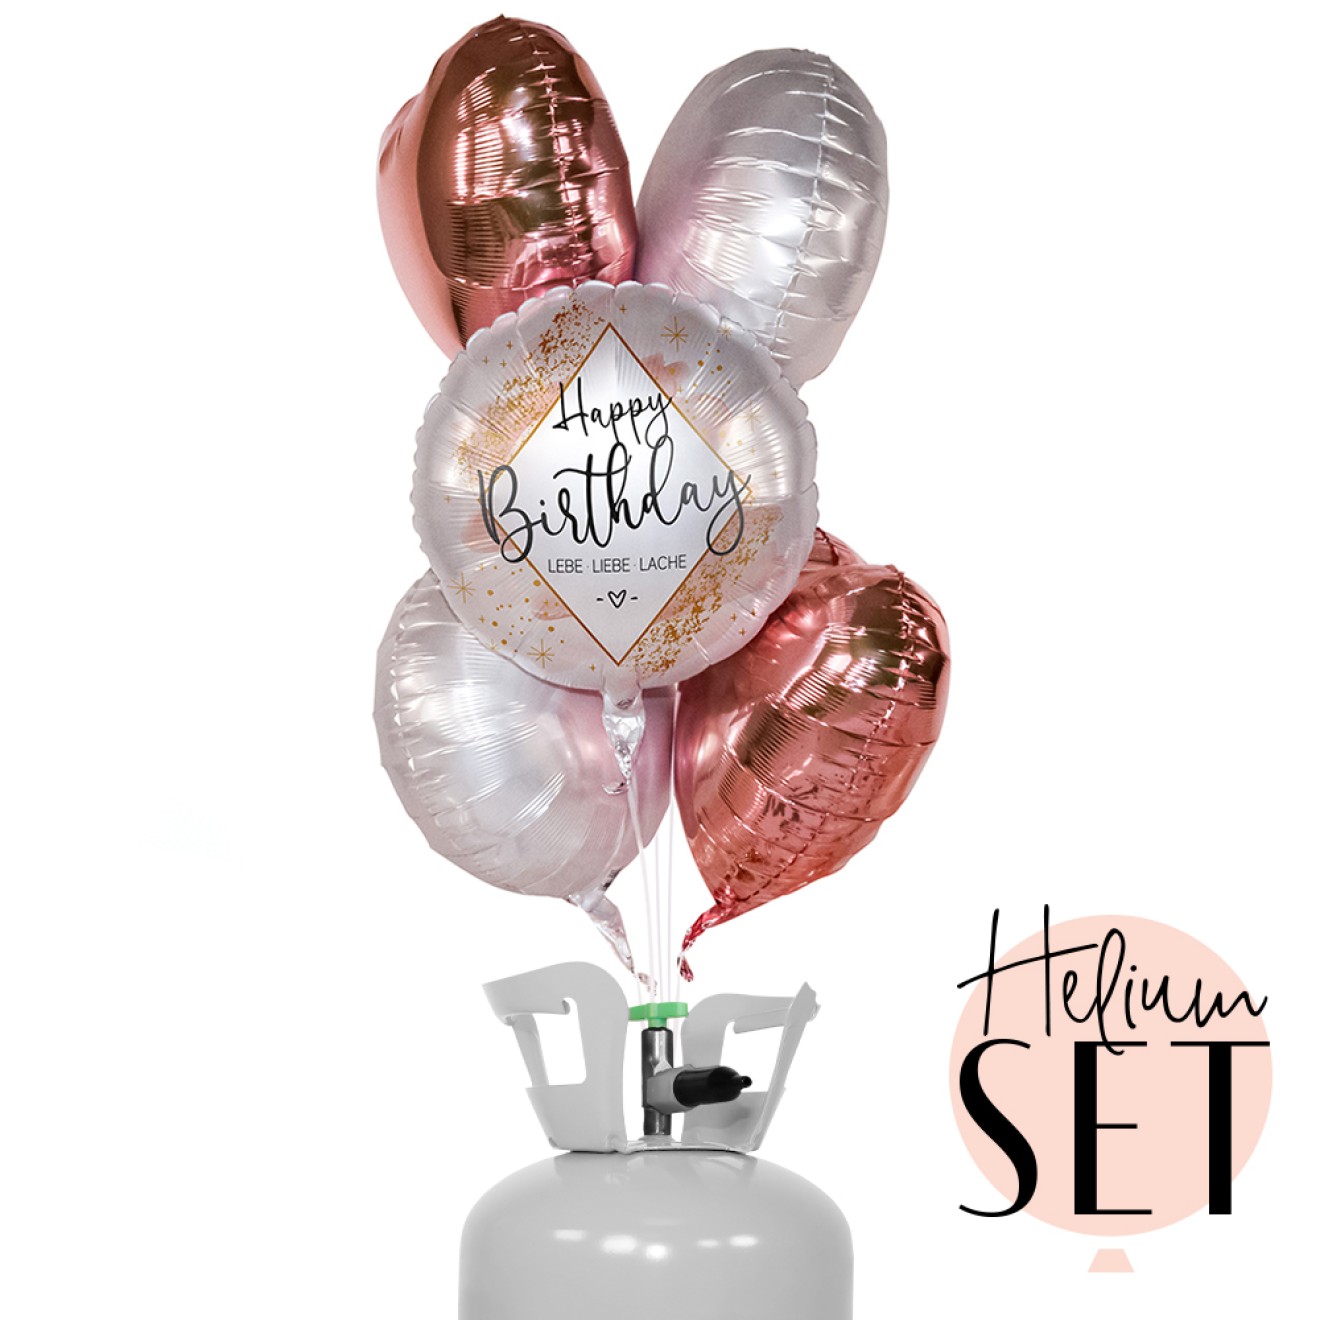 Helium Set - Birthday Smooth Watercolor